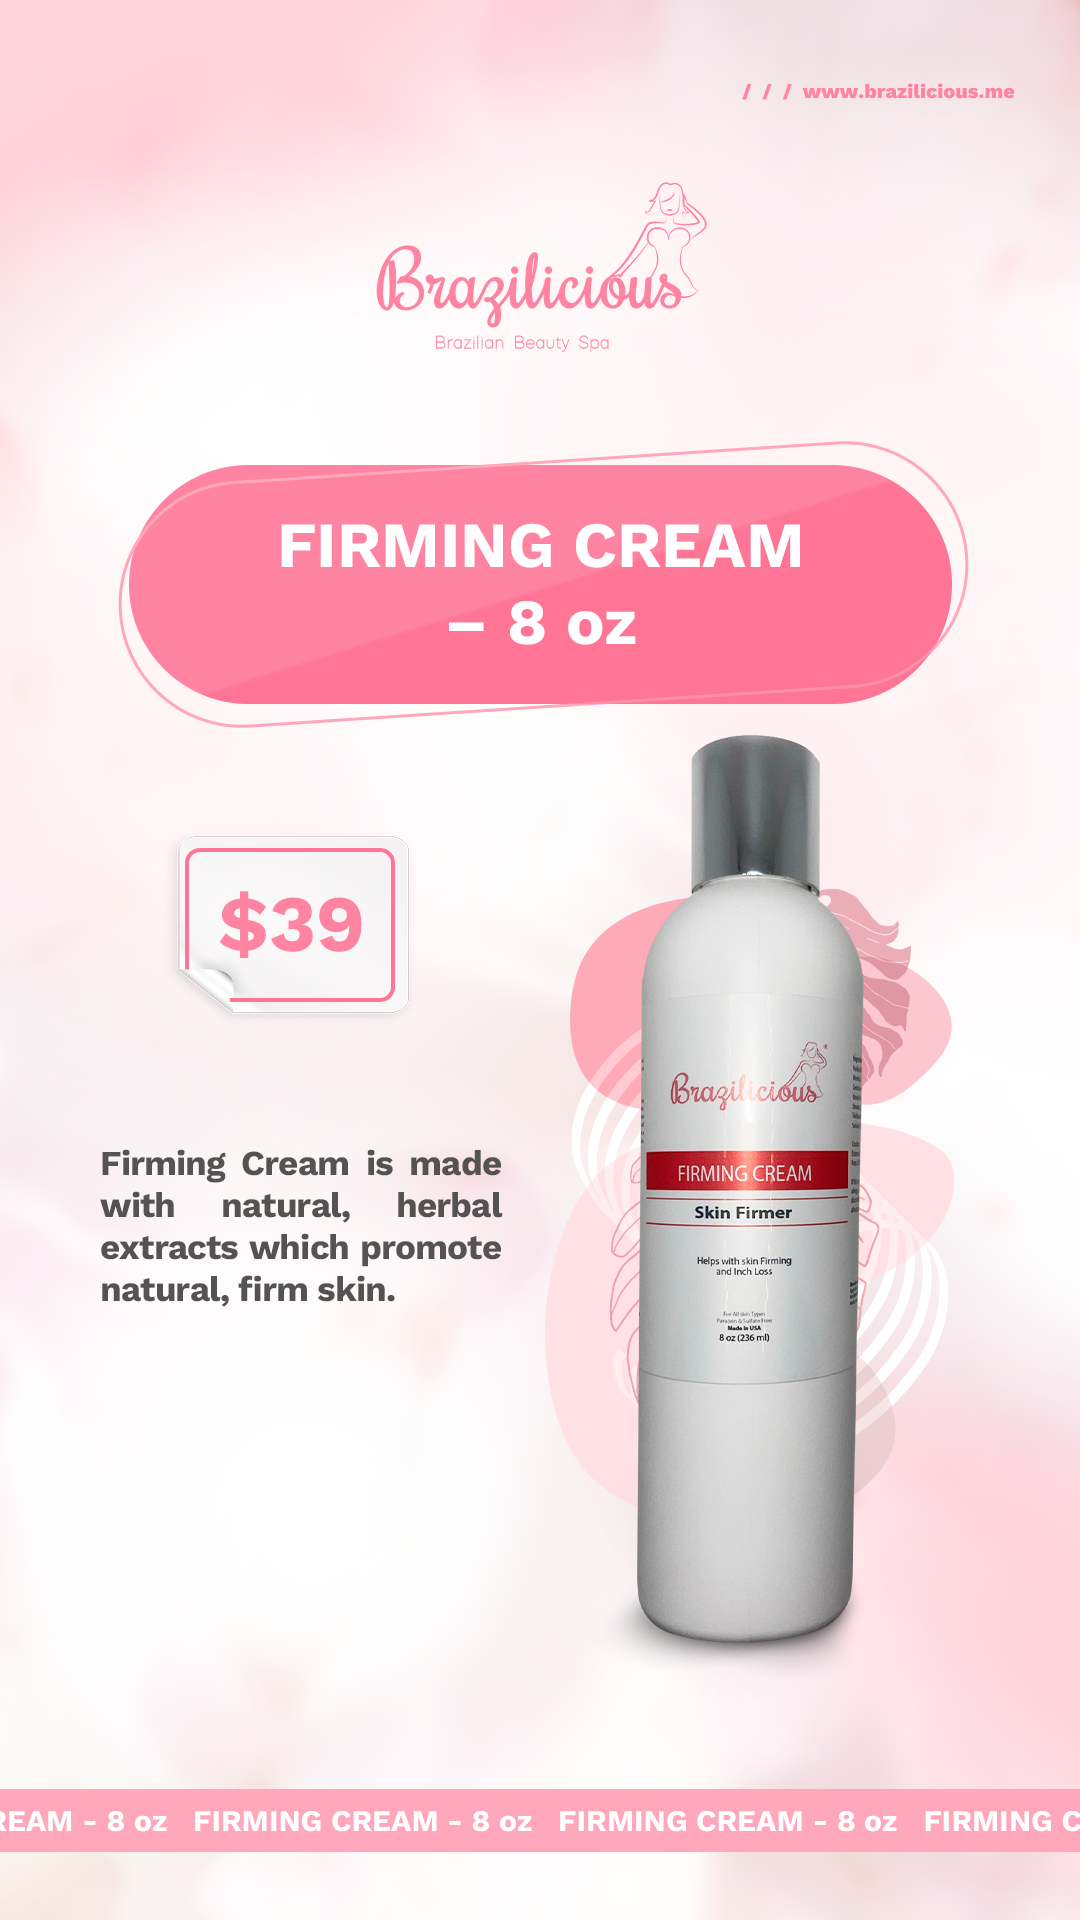 Firming Cream - 8 oz